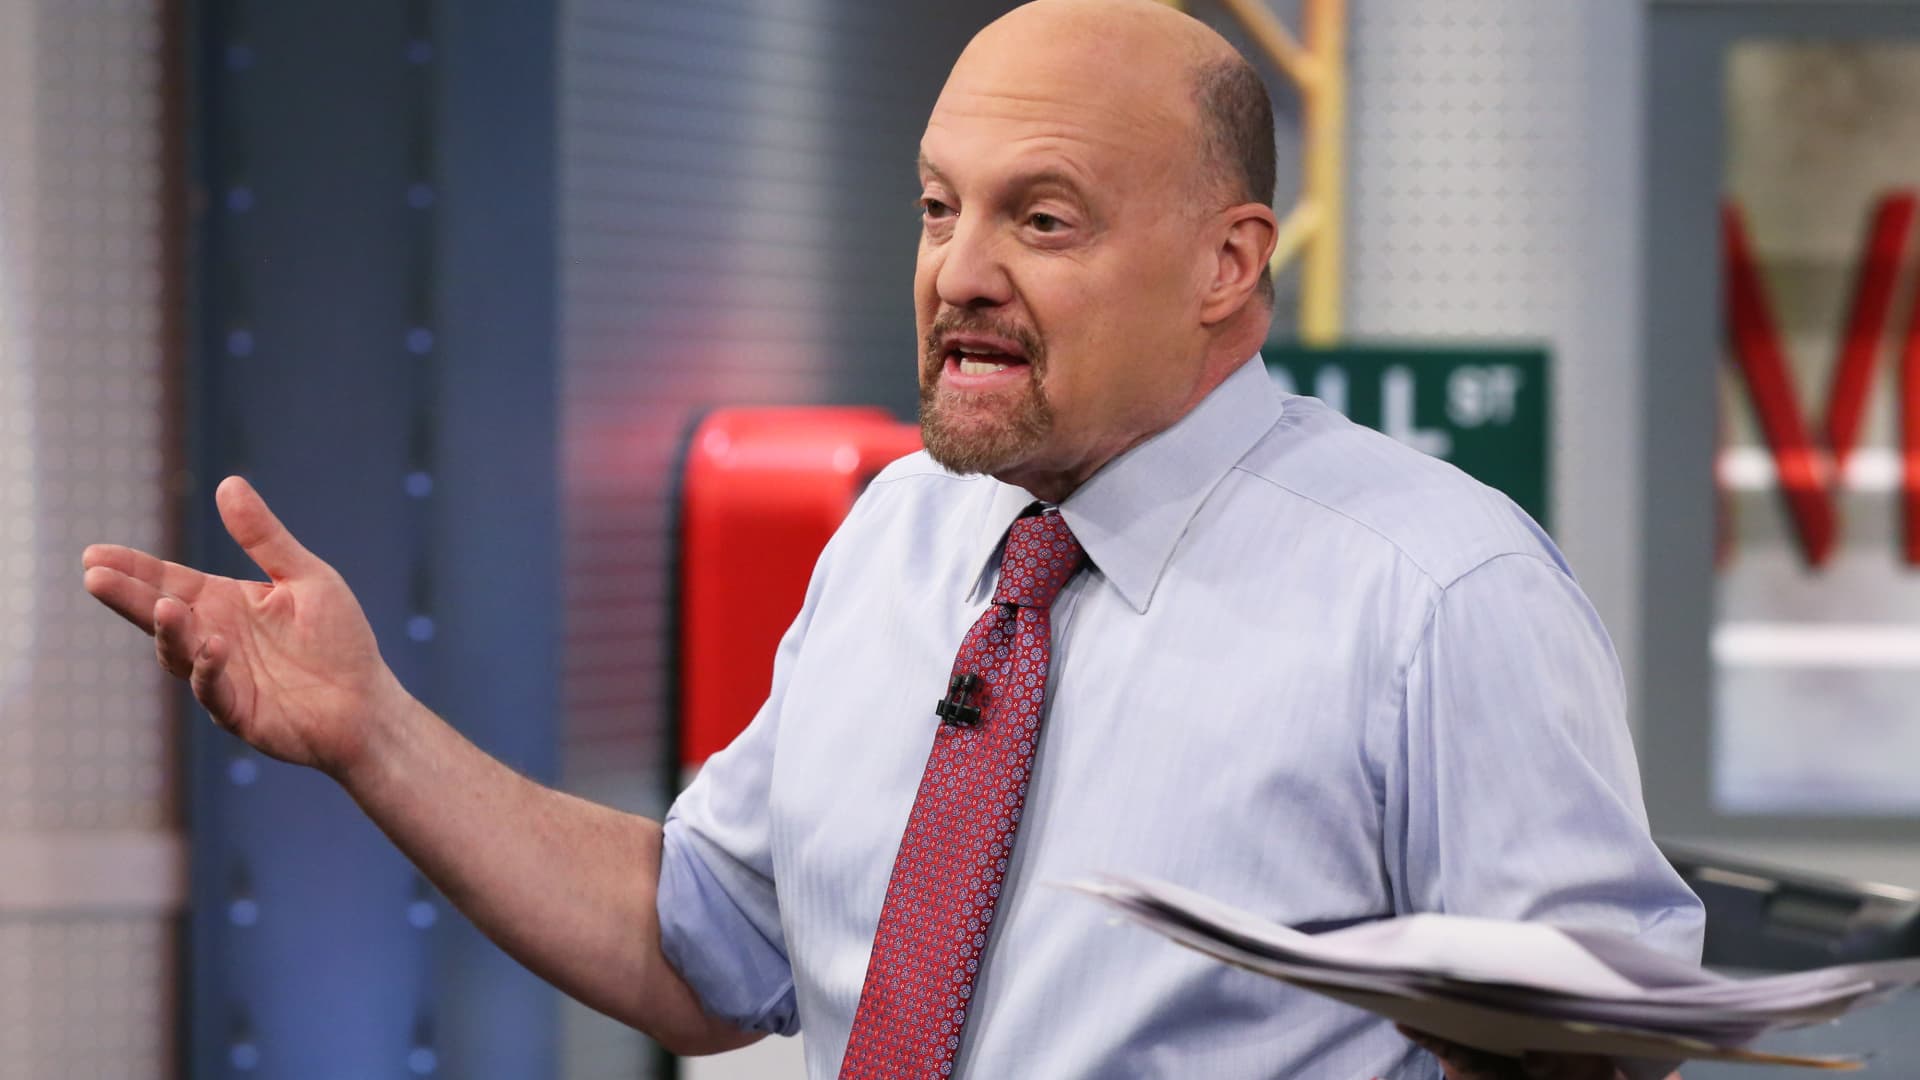 Jim Cramer says to use Wednesday’s rally to reposition into profitable stocks